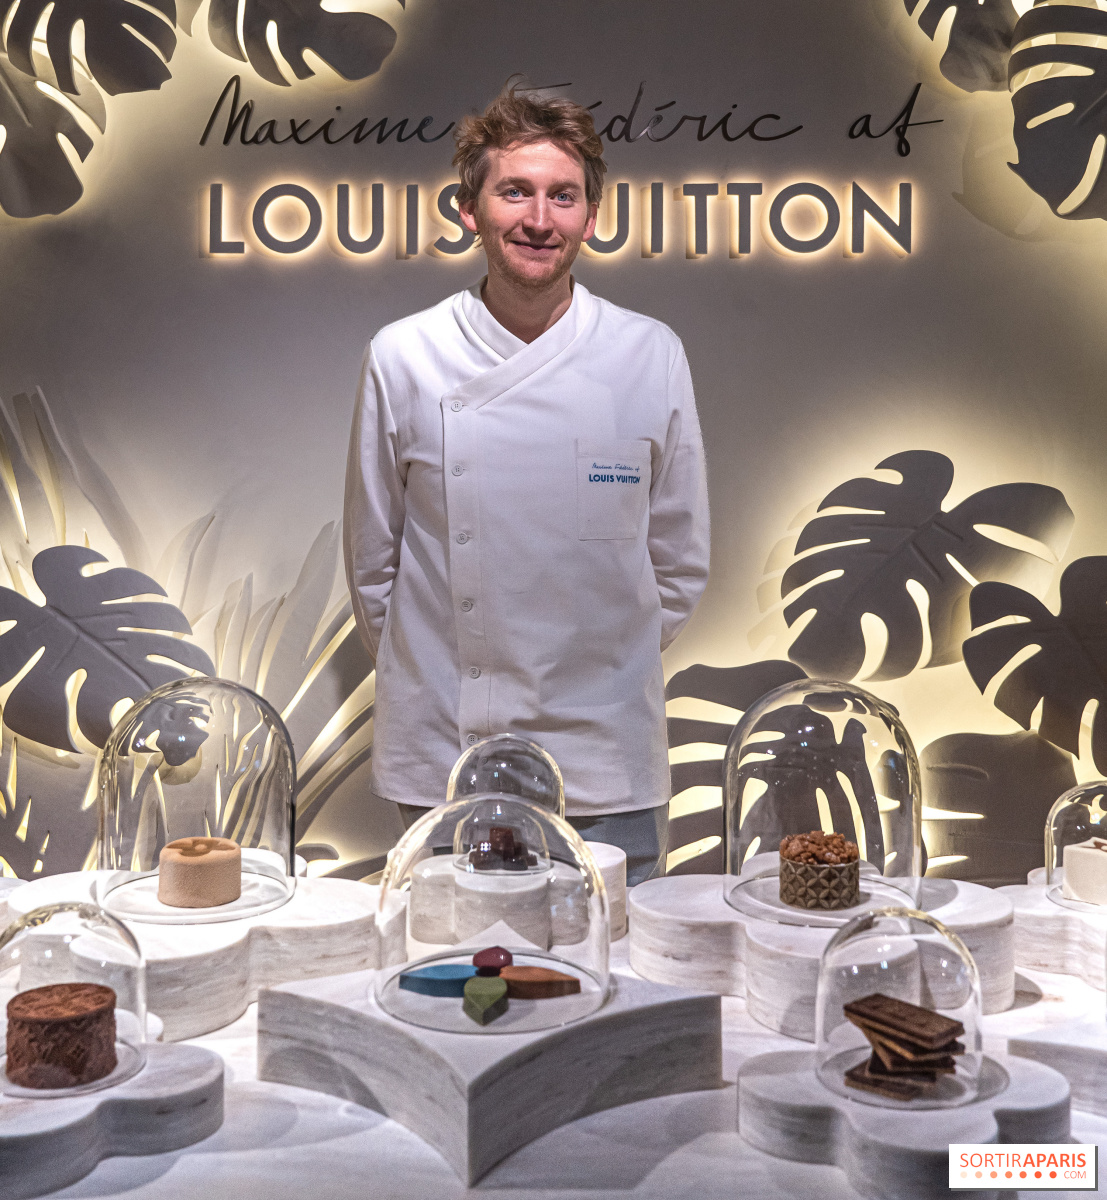 LV Dream - the latest café and chocolate store by Maxime Frédéric